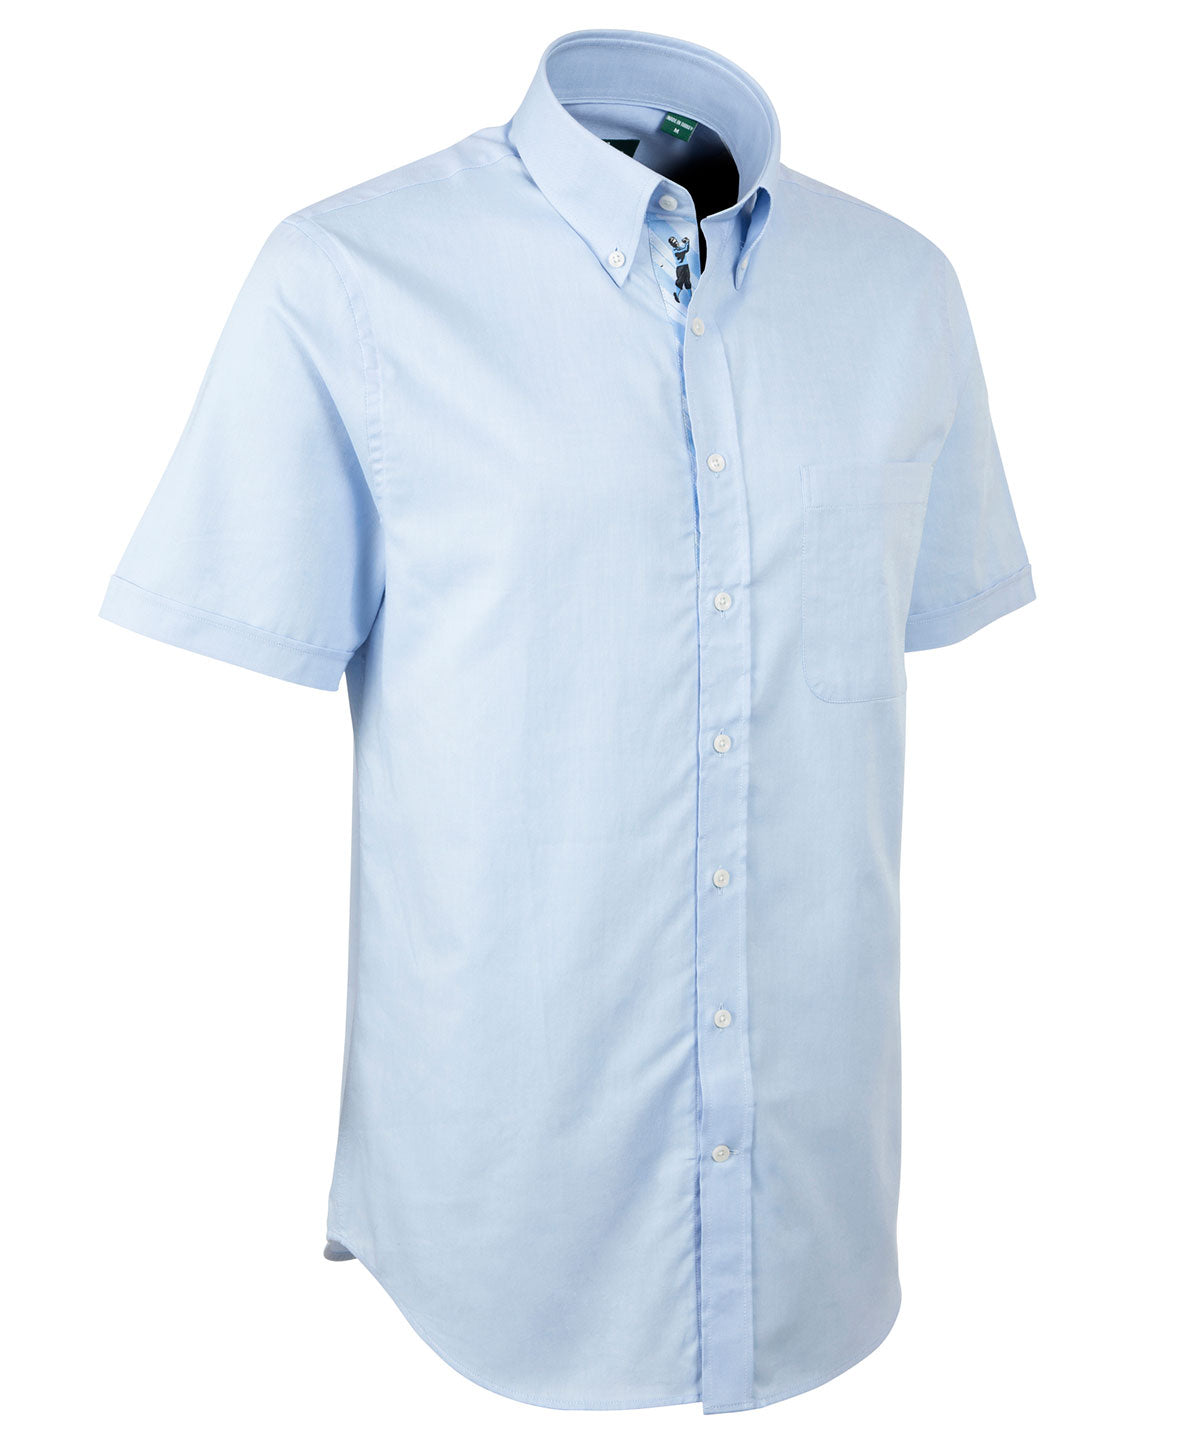 Signature 100% Cotton Oxford Button-Down Short Sleeve Shirt